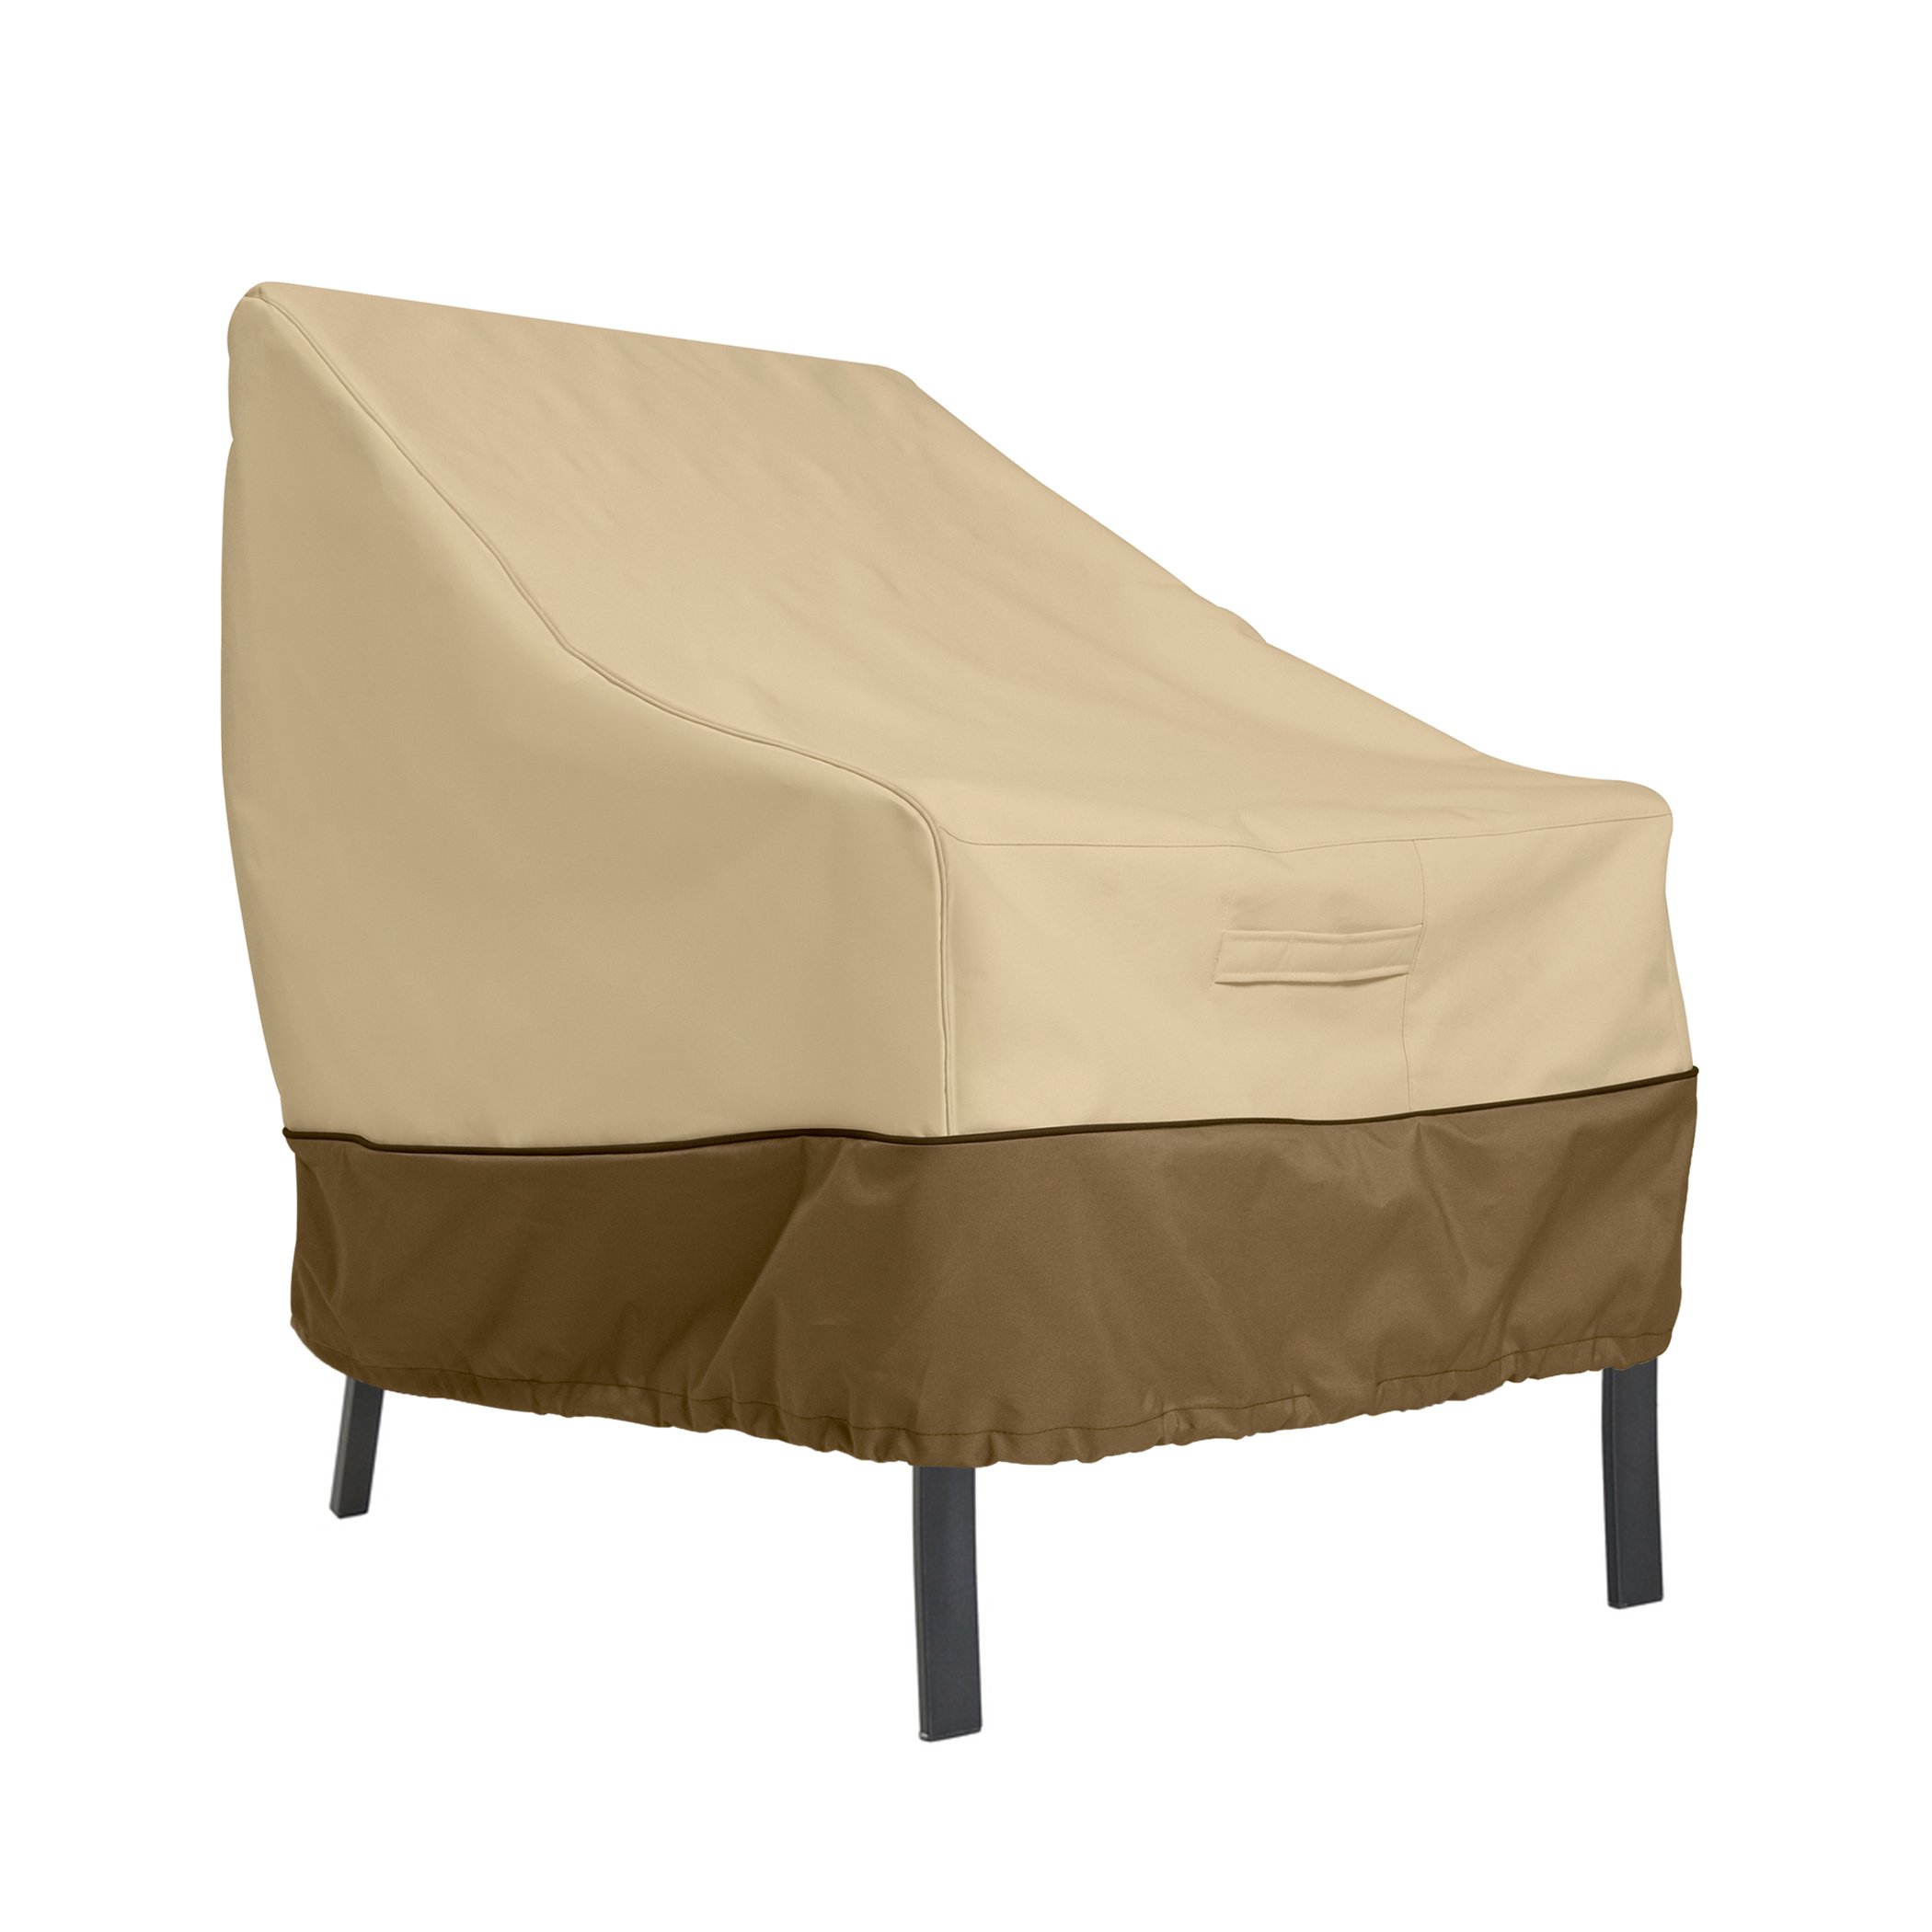 Classic Accessories Veranda Patio Lounge Chair Cover for Wicker Furniture, Large